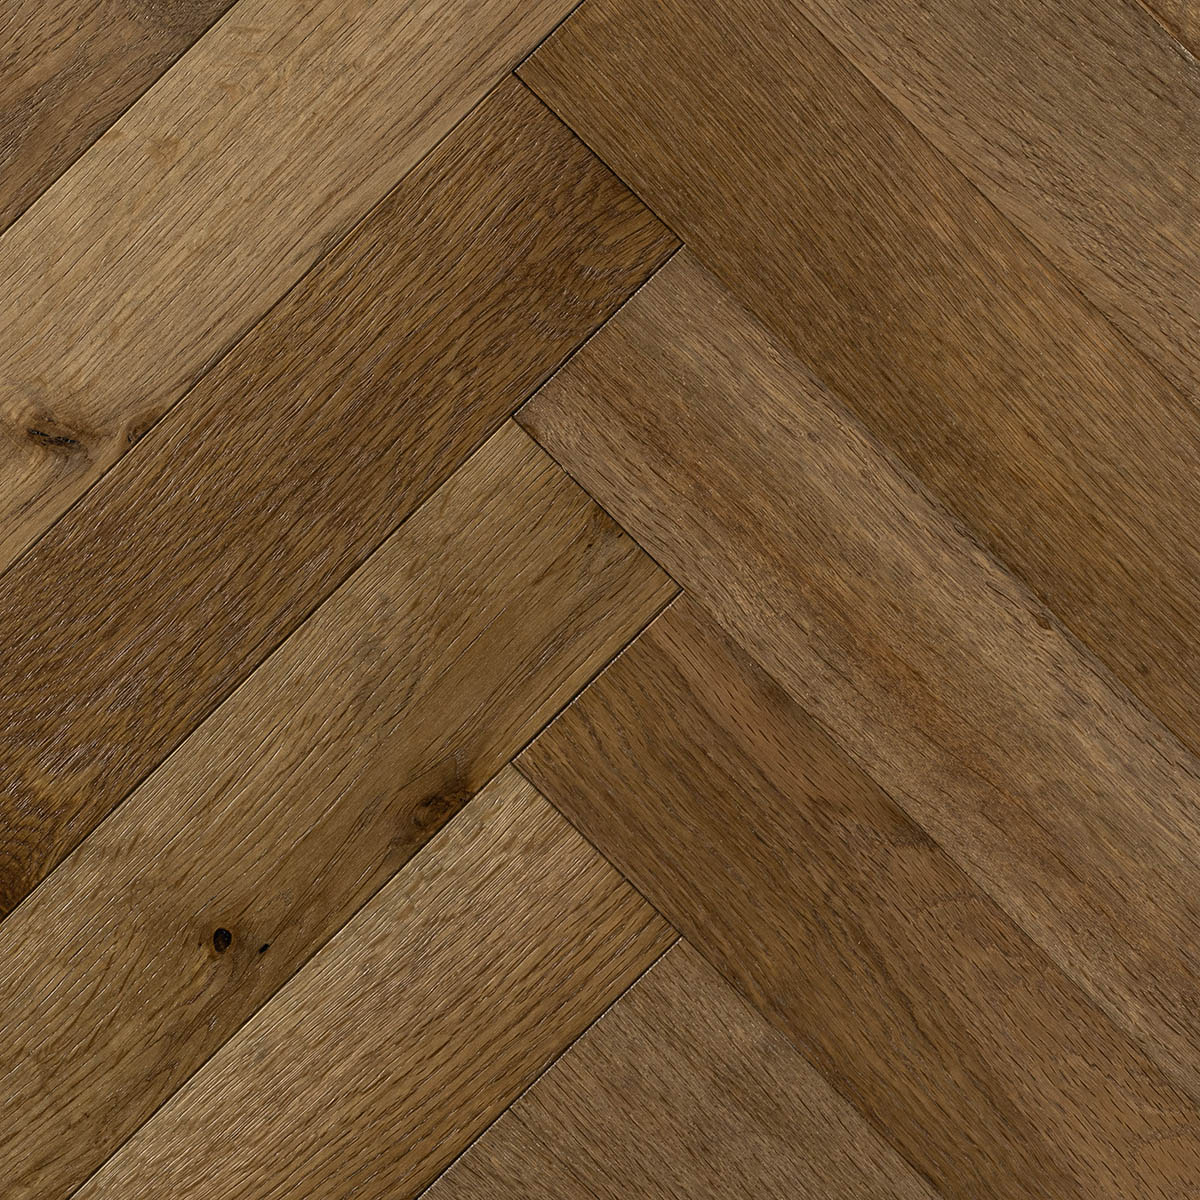 Bloomfield Drive - Rustic-Grade Oak Herringbone Floor 280mm x 70mm